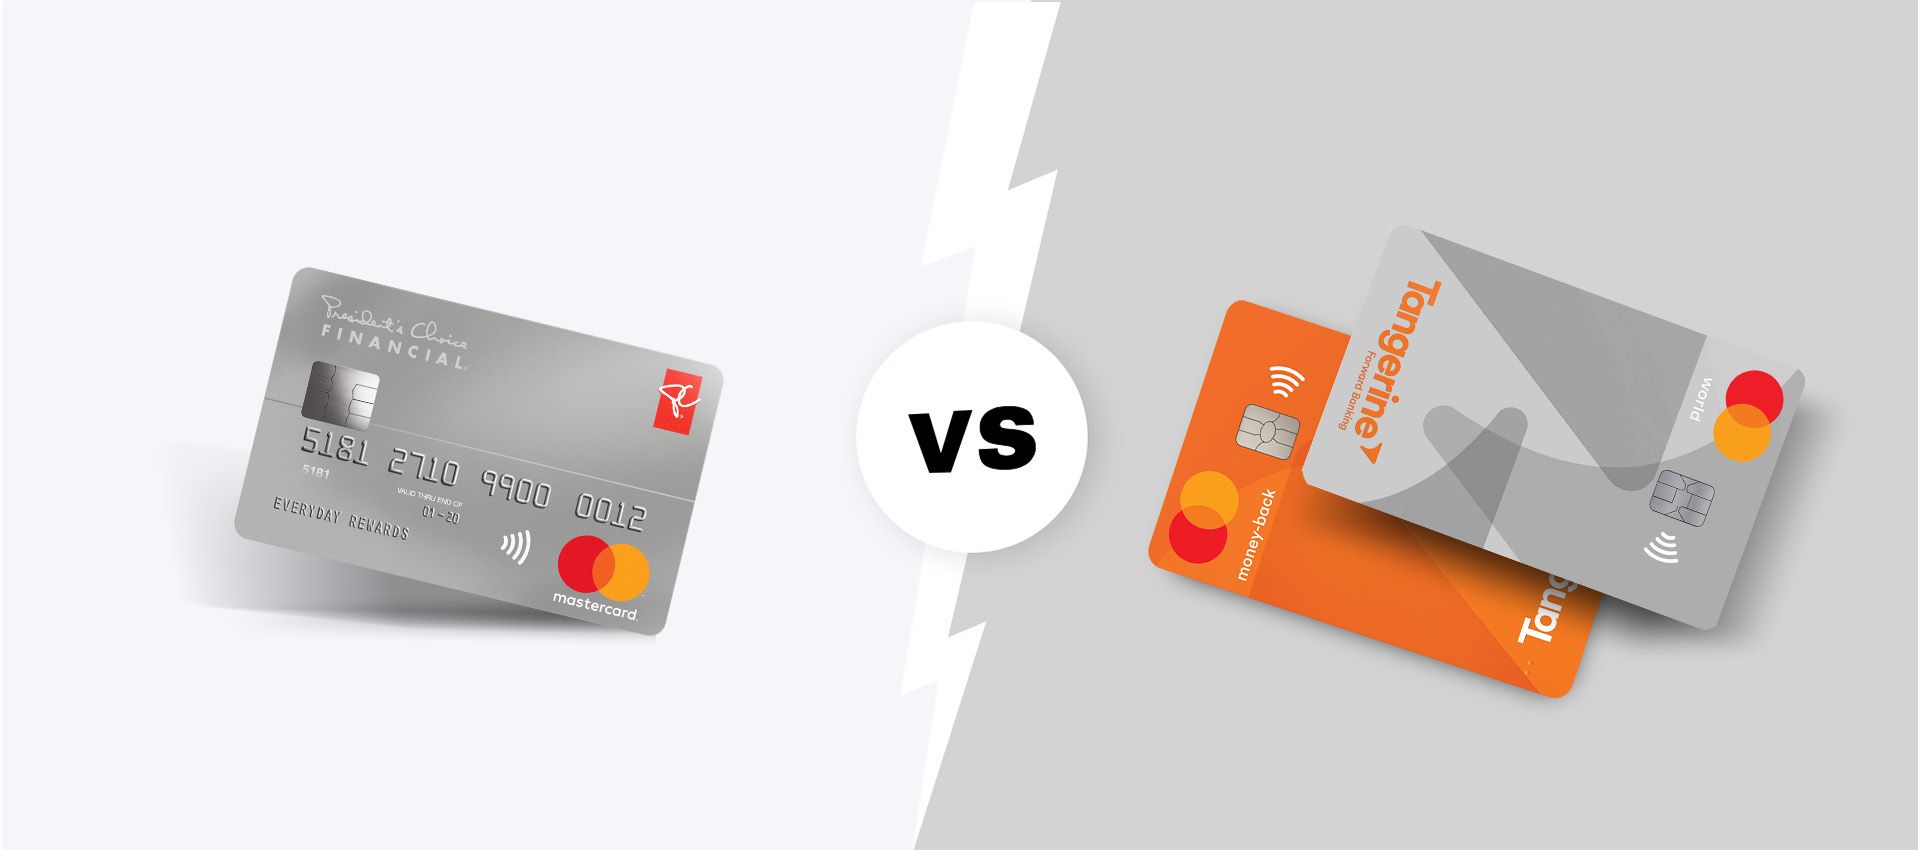 PC financial world elite mastercard vs. Tangerine mastercards